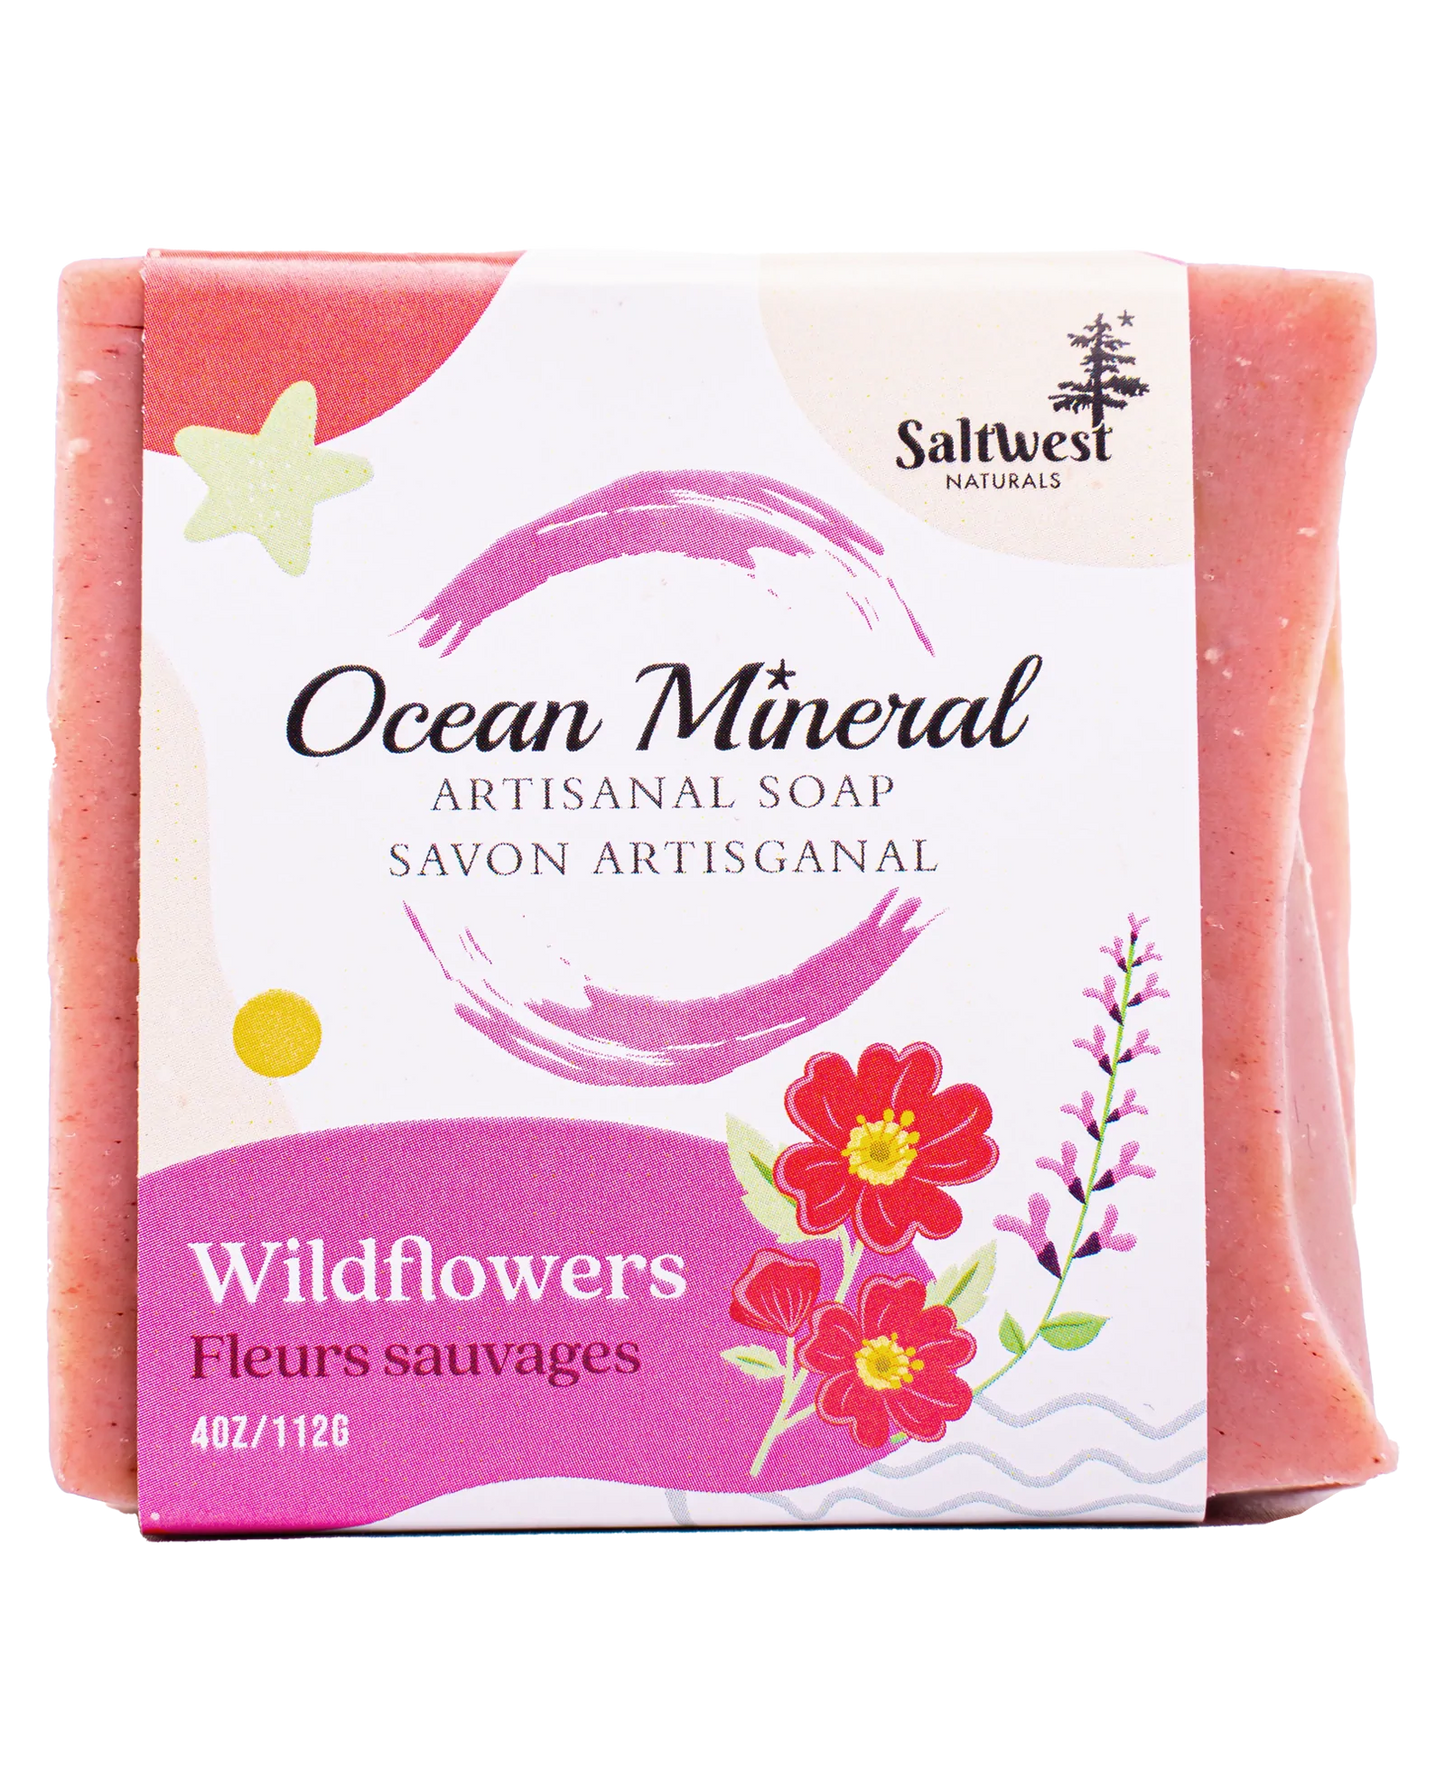 Saltwest Naturals - Ocean Mineral Soaps